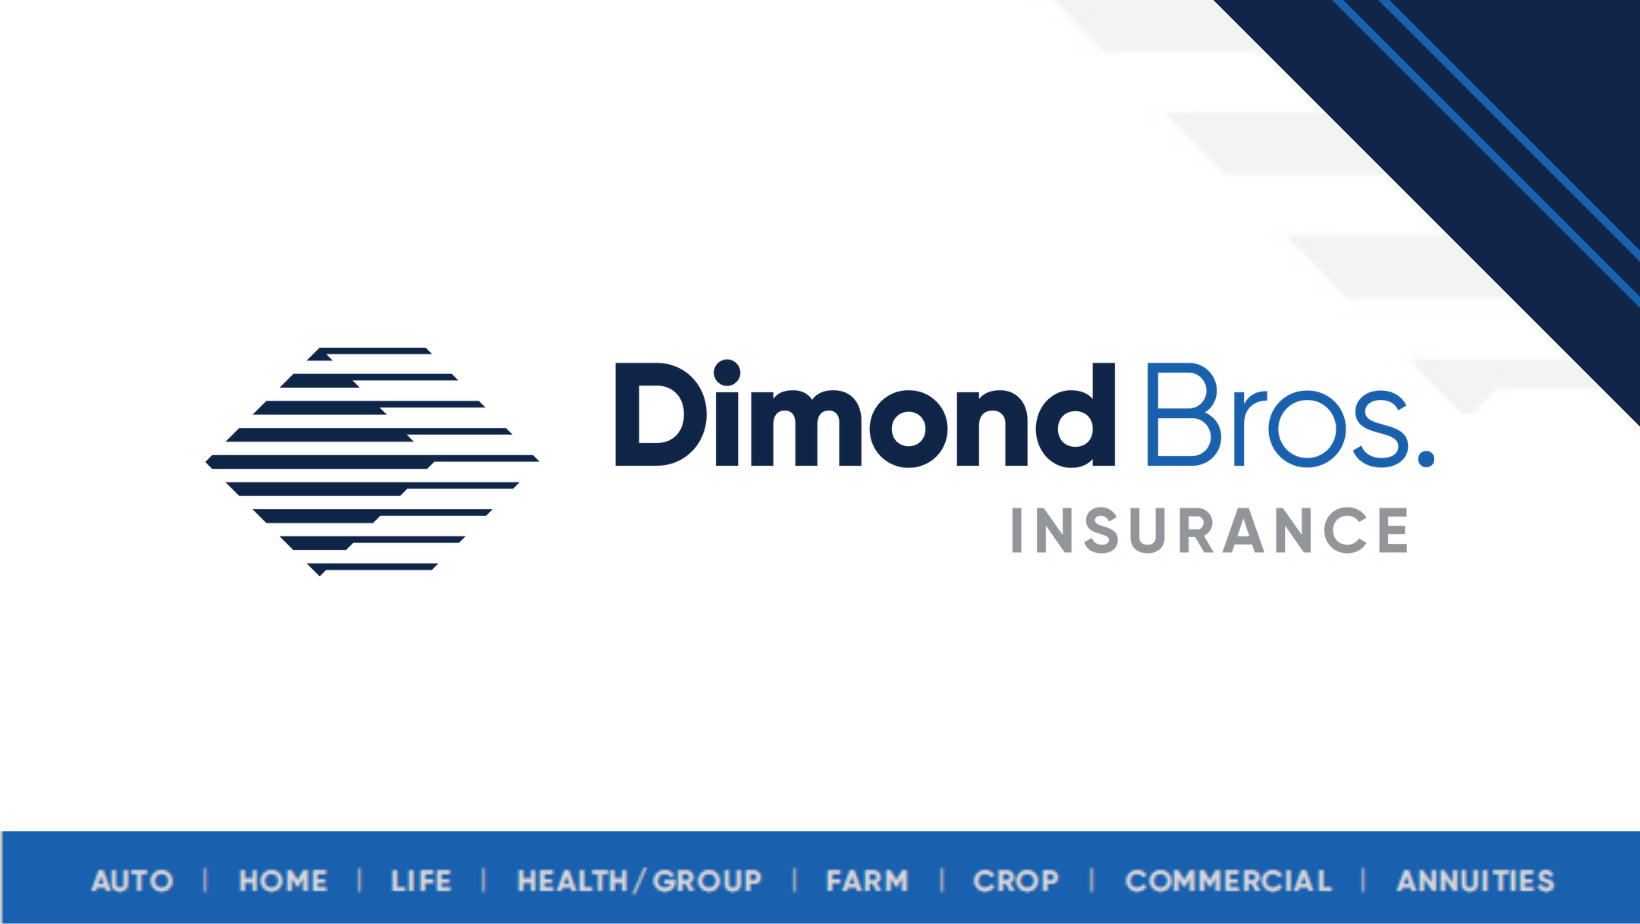 Dimond Bros. Insurance Taylorville Branch 1011 N Webster St, Taylorville Illinois 62568